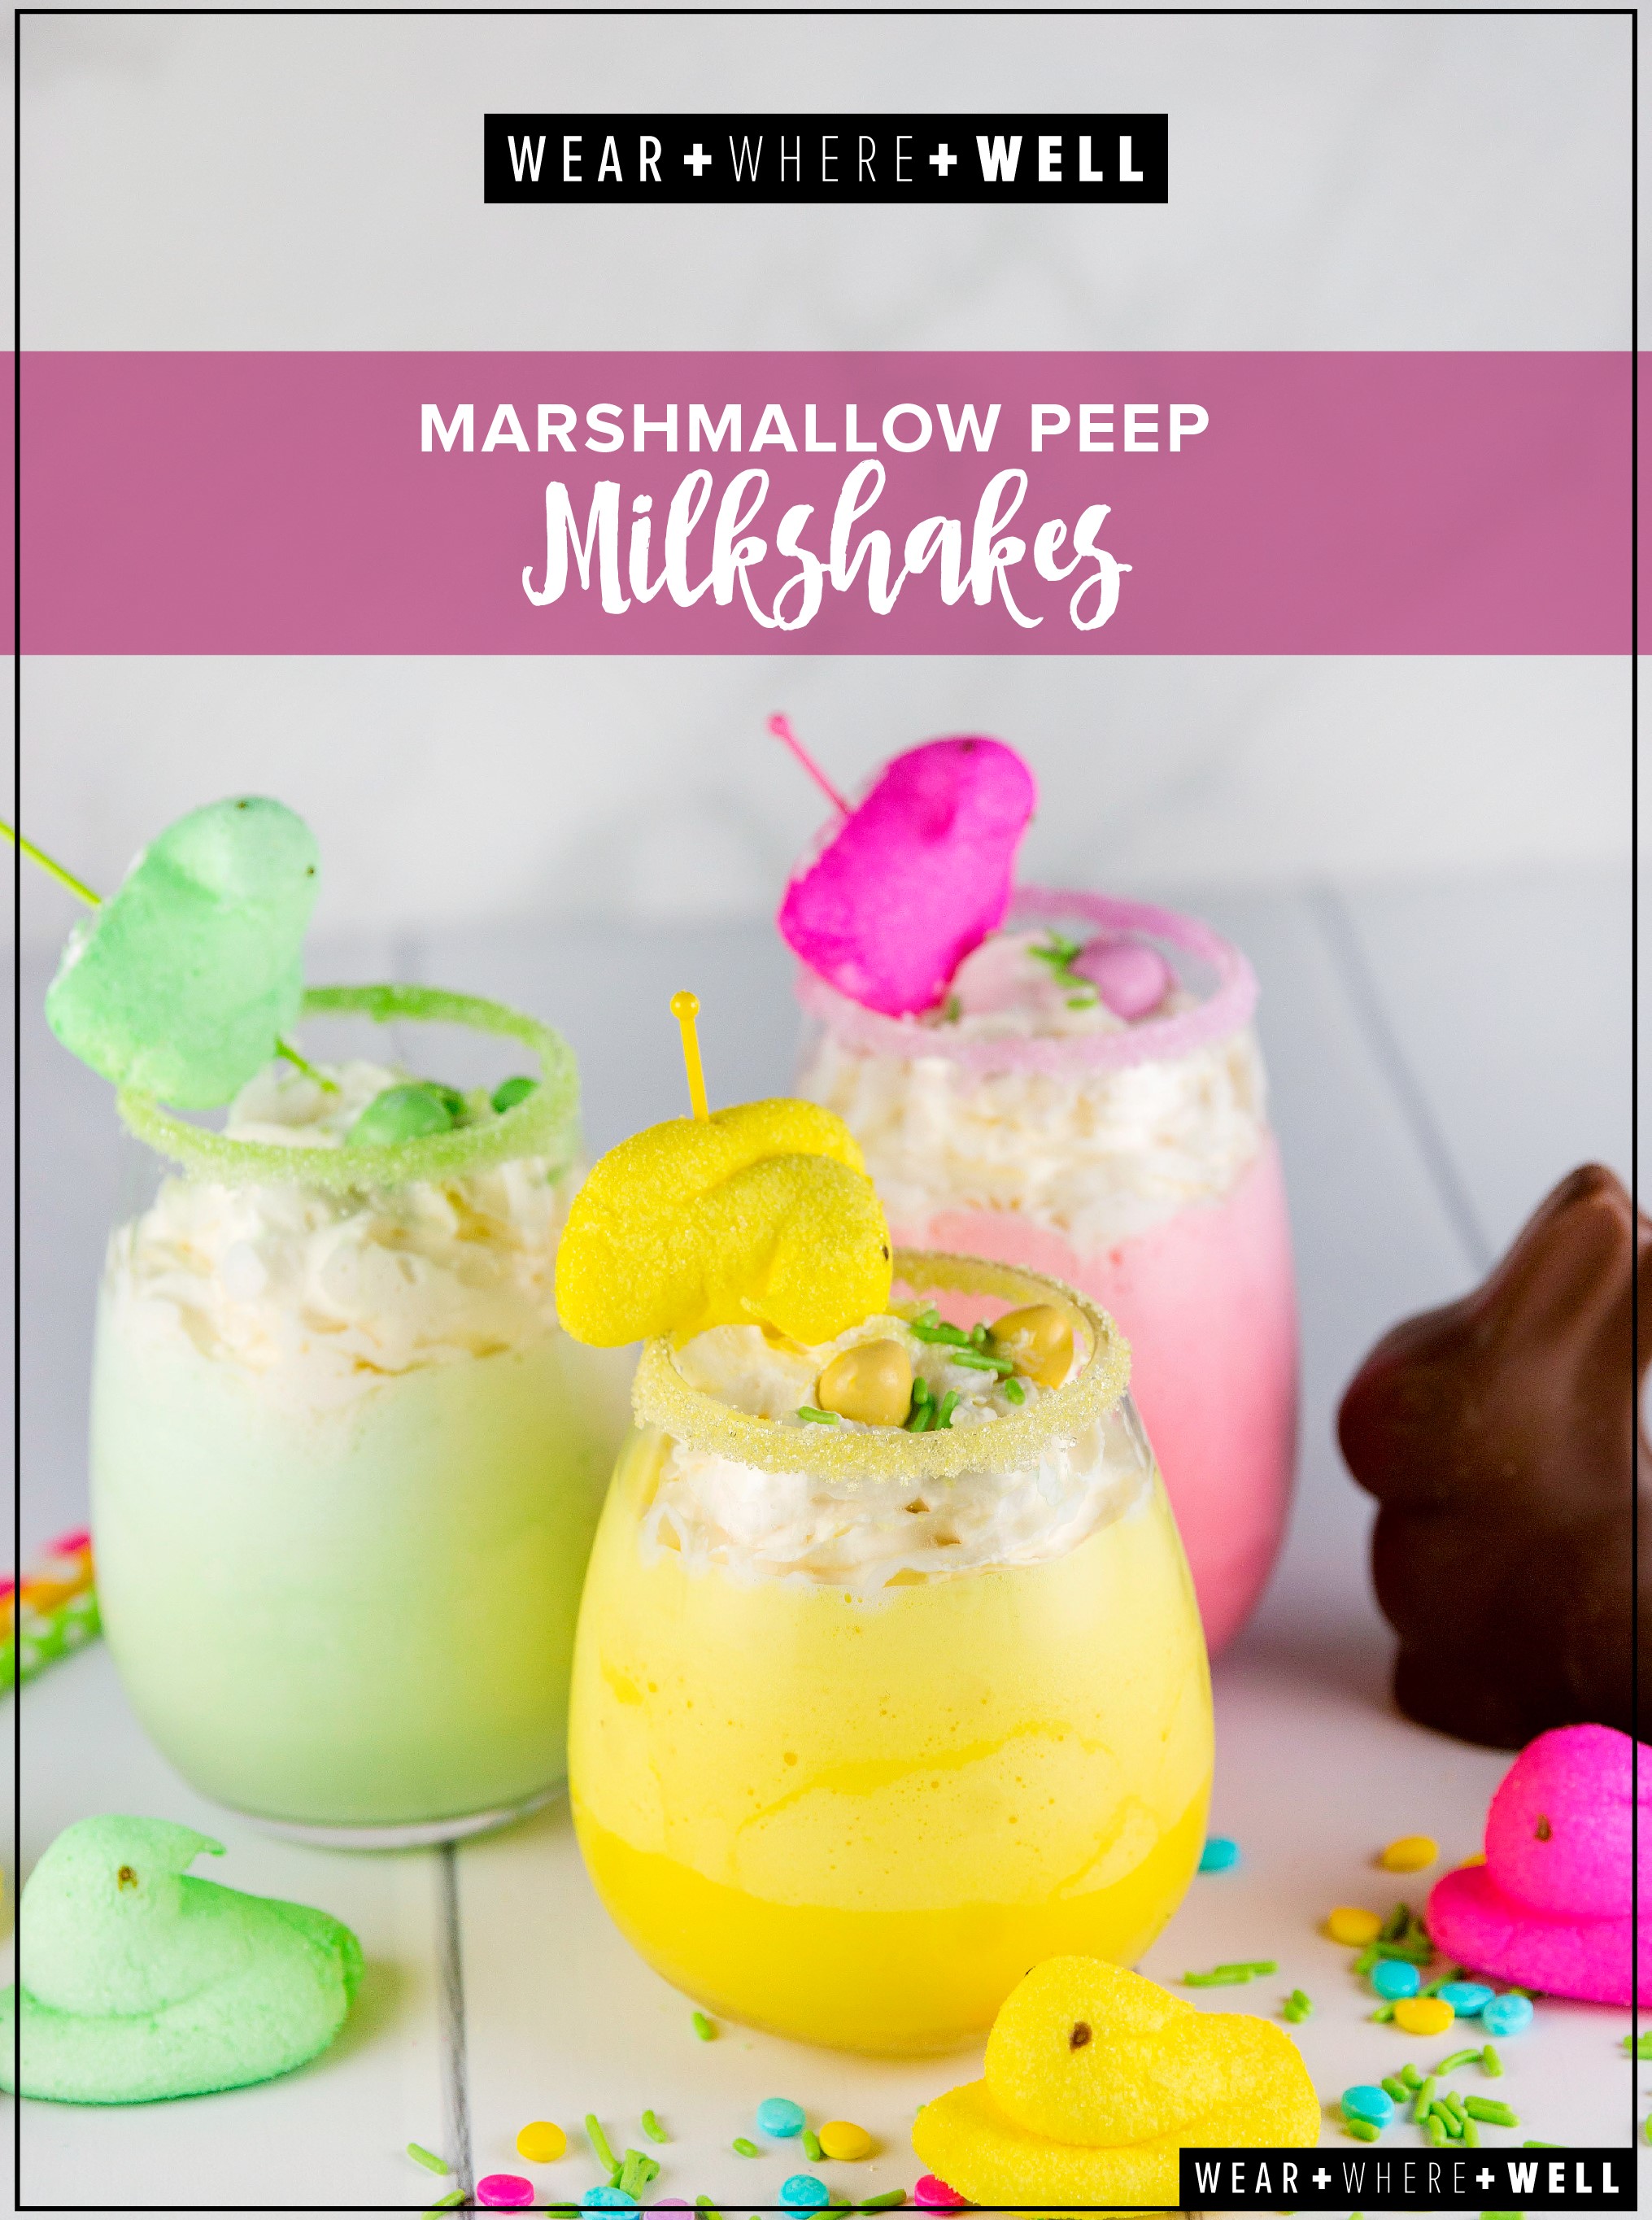 Wear+Where+Well shares a recipe for Marshmallow Peep Milkshakes.